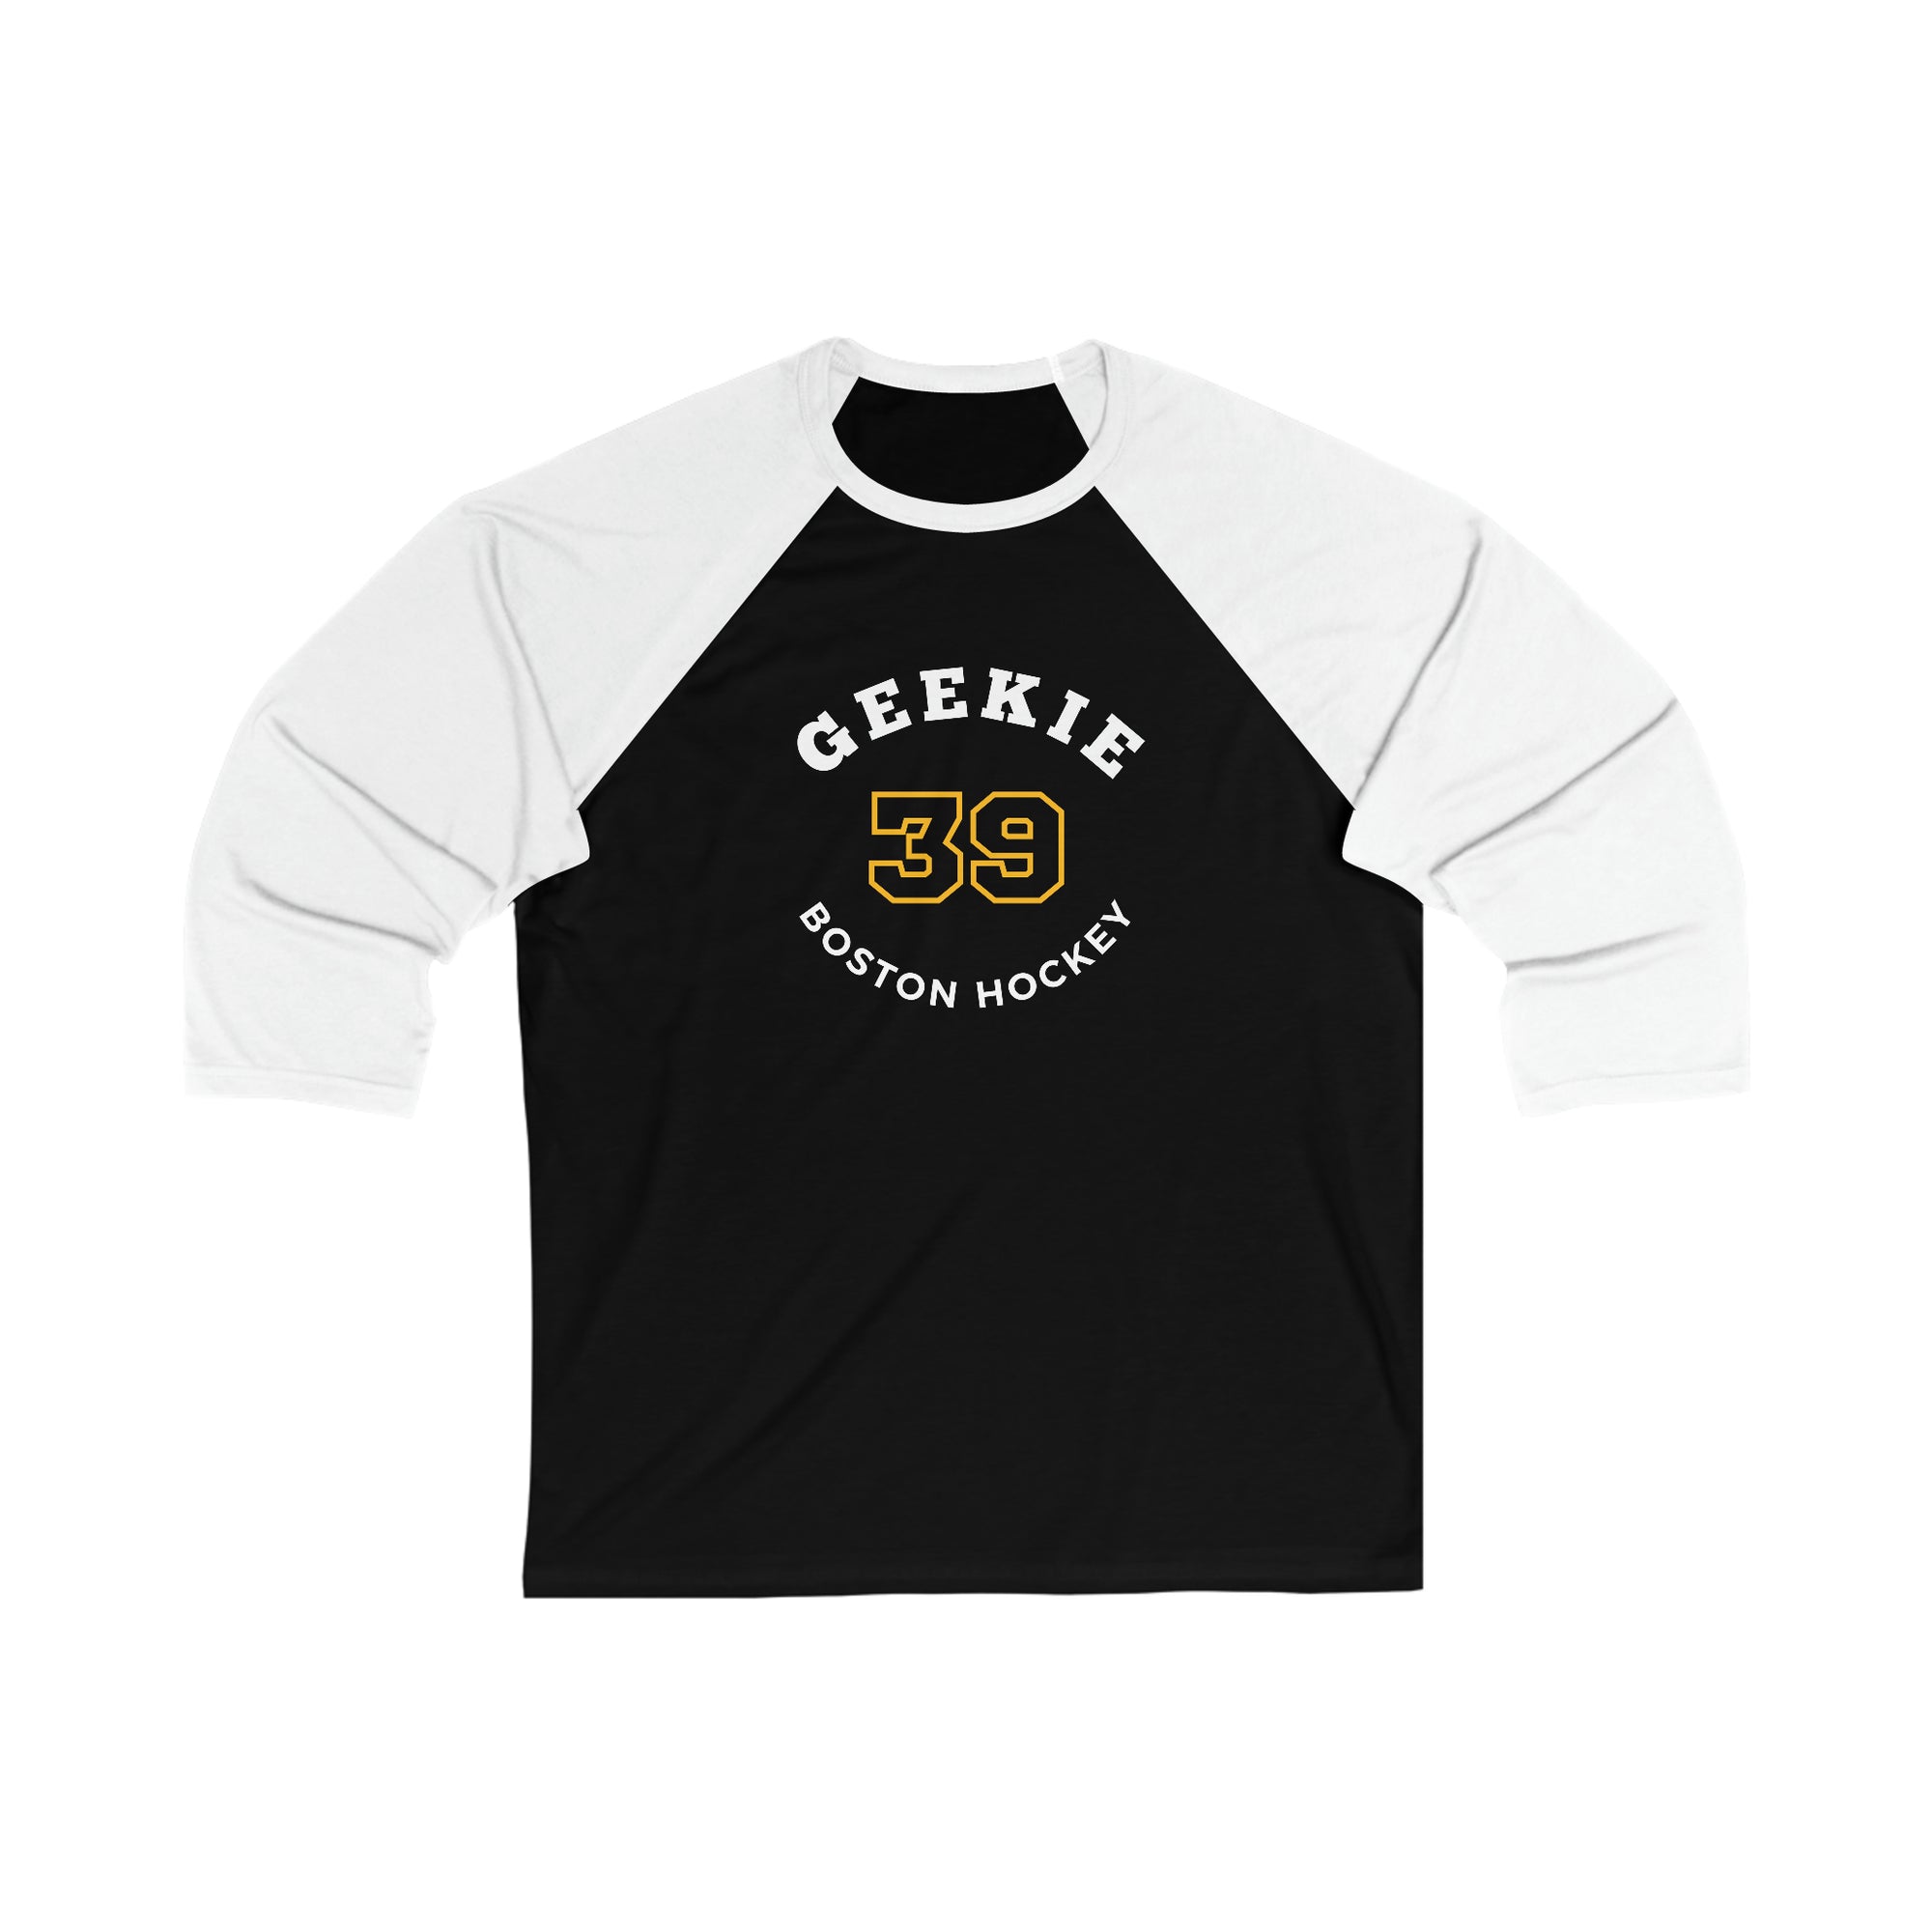 Geekie 39 Boston Hockey Number Arch Design Unisex Tri-Blend 3/4 Sleeve Raglan Baseball Shirt